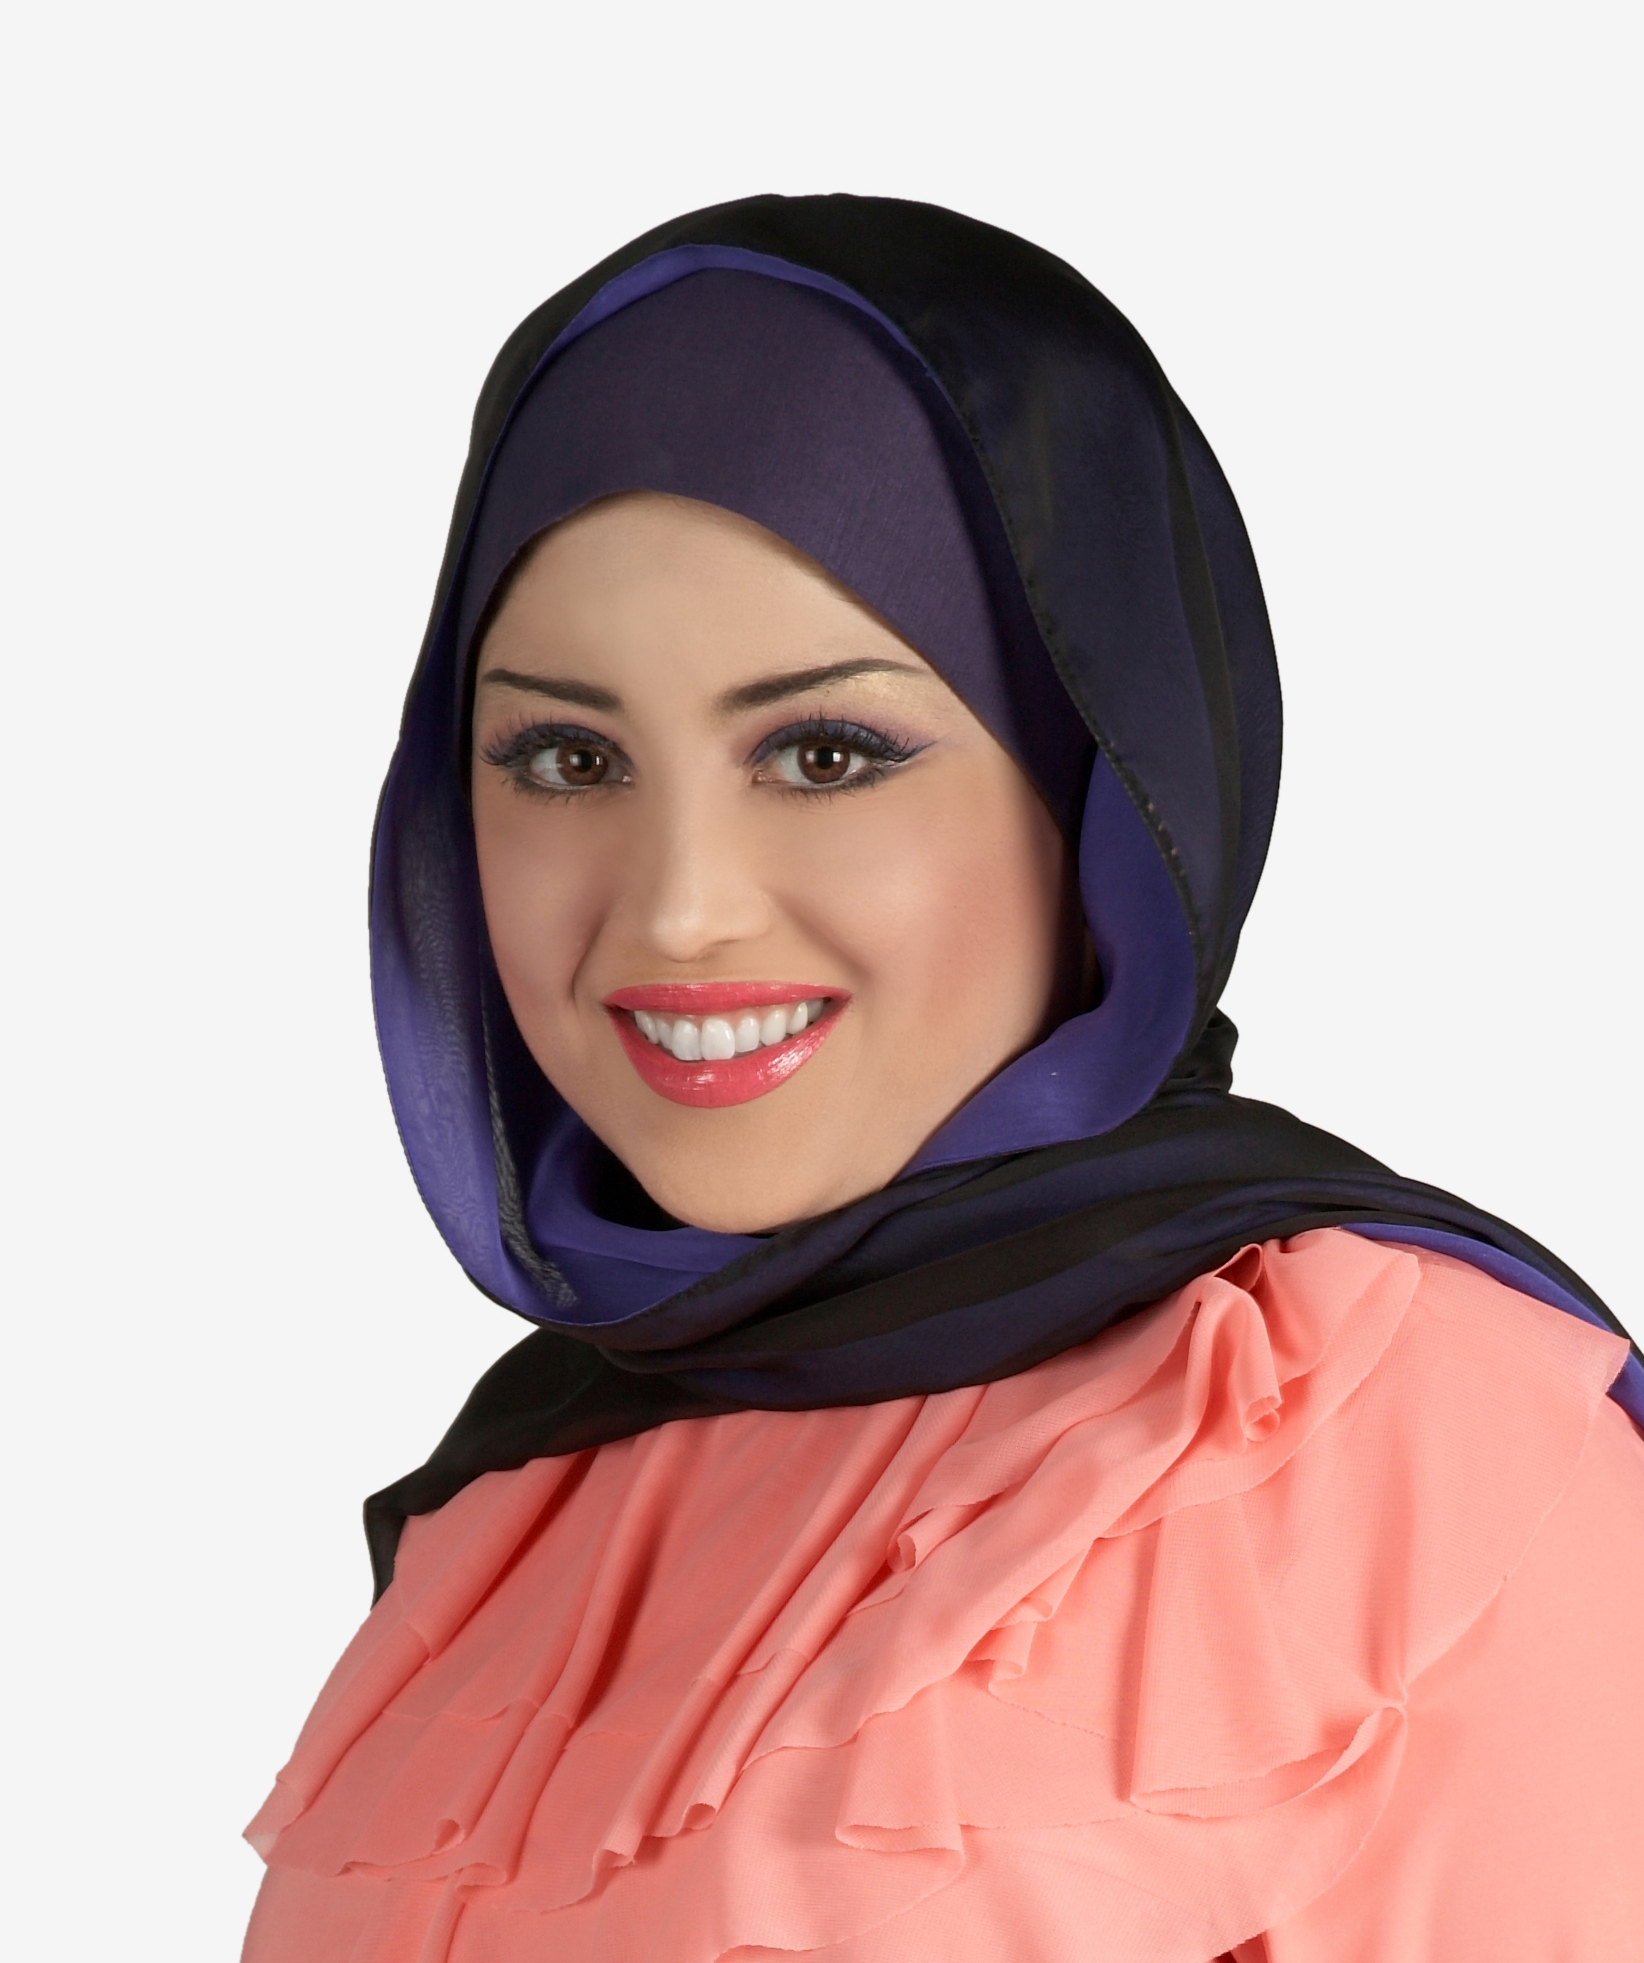 Kuwaiti Engineer Manar Al-Hashash